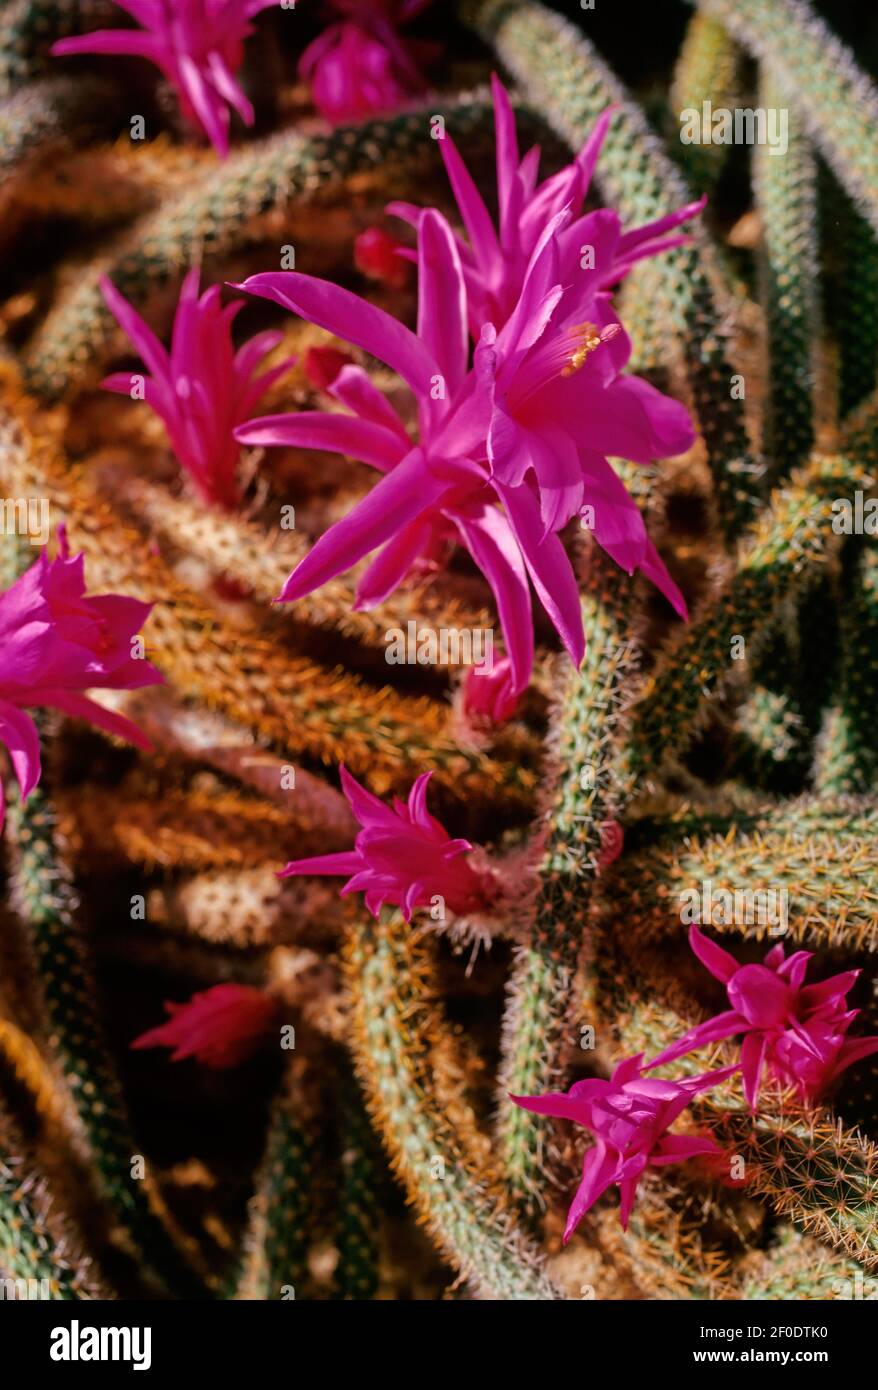 Aporocactus flagelliformis (syn. Disocactus flagelliformis), the rattail cactus, is a species of flowering plant in the cactus family Cactaceae, and i Stock Photo